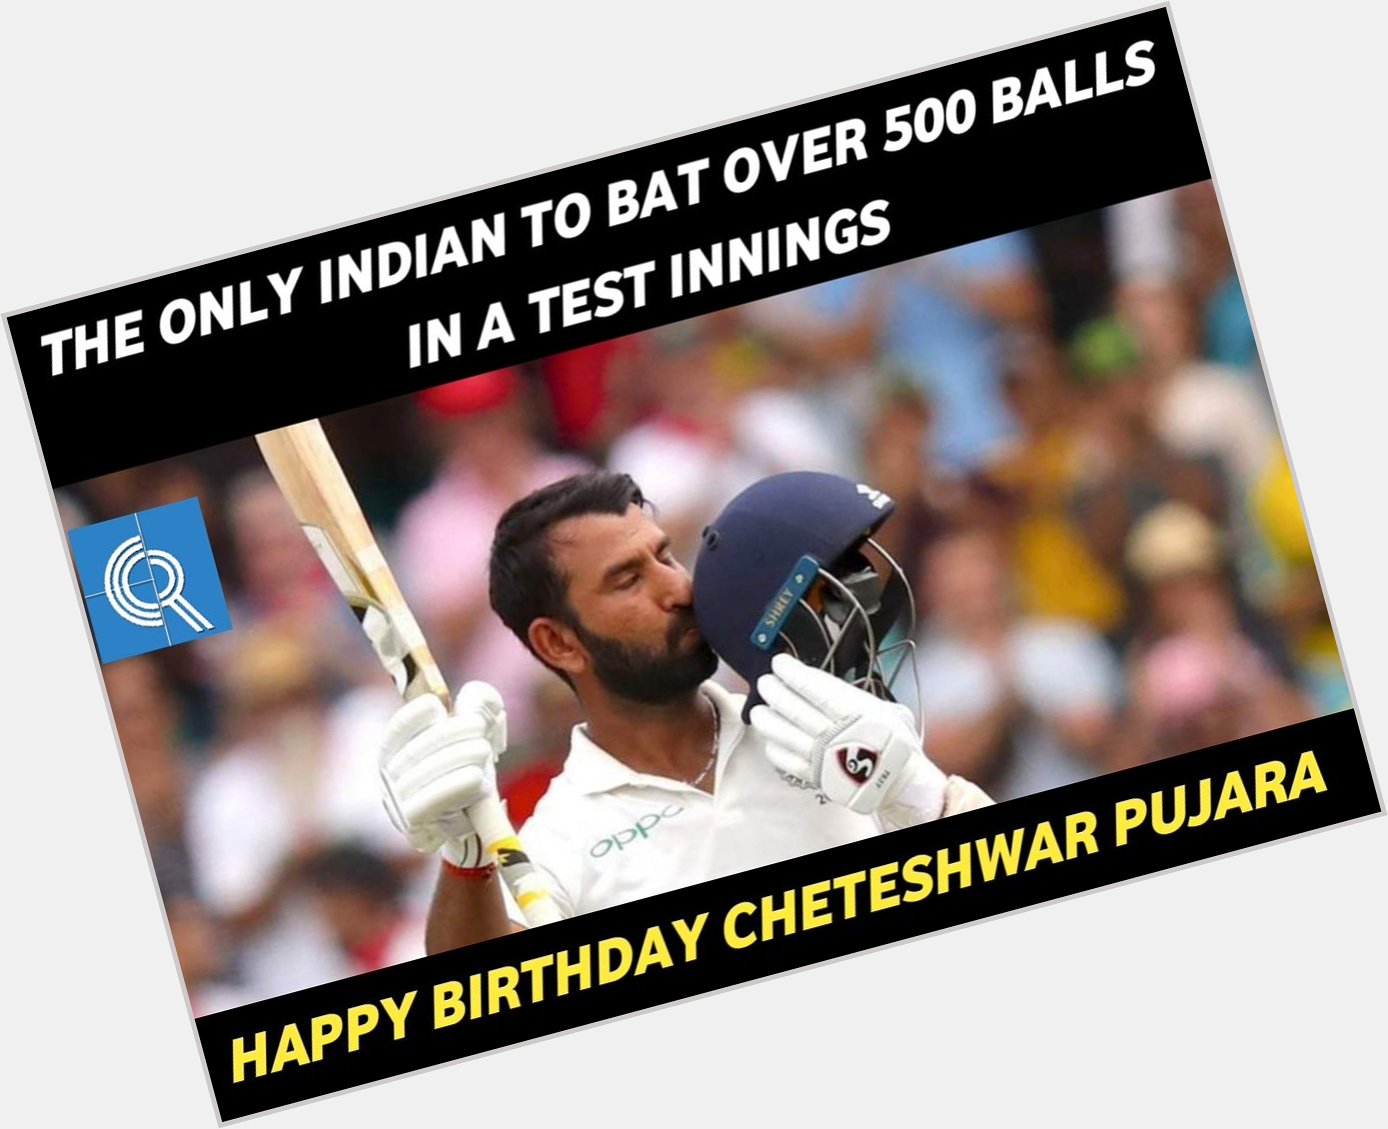 Happy Birthday Cheteshwar Pujara .
.  